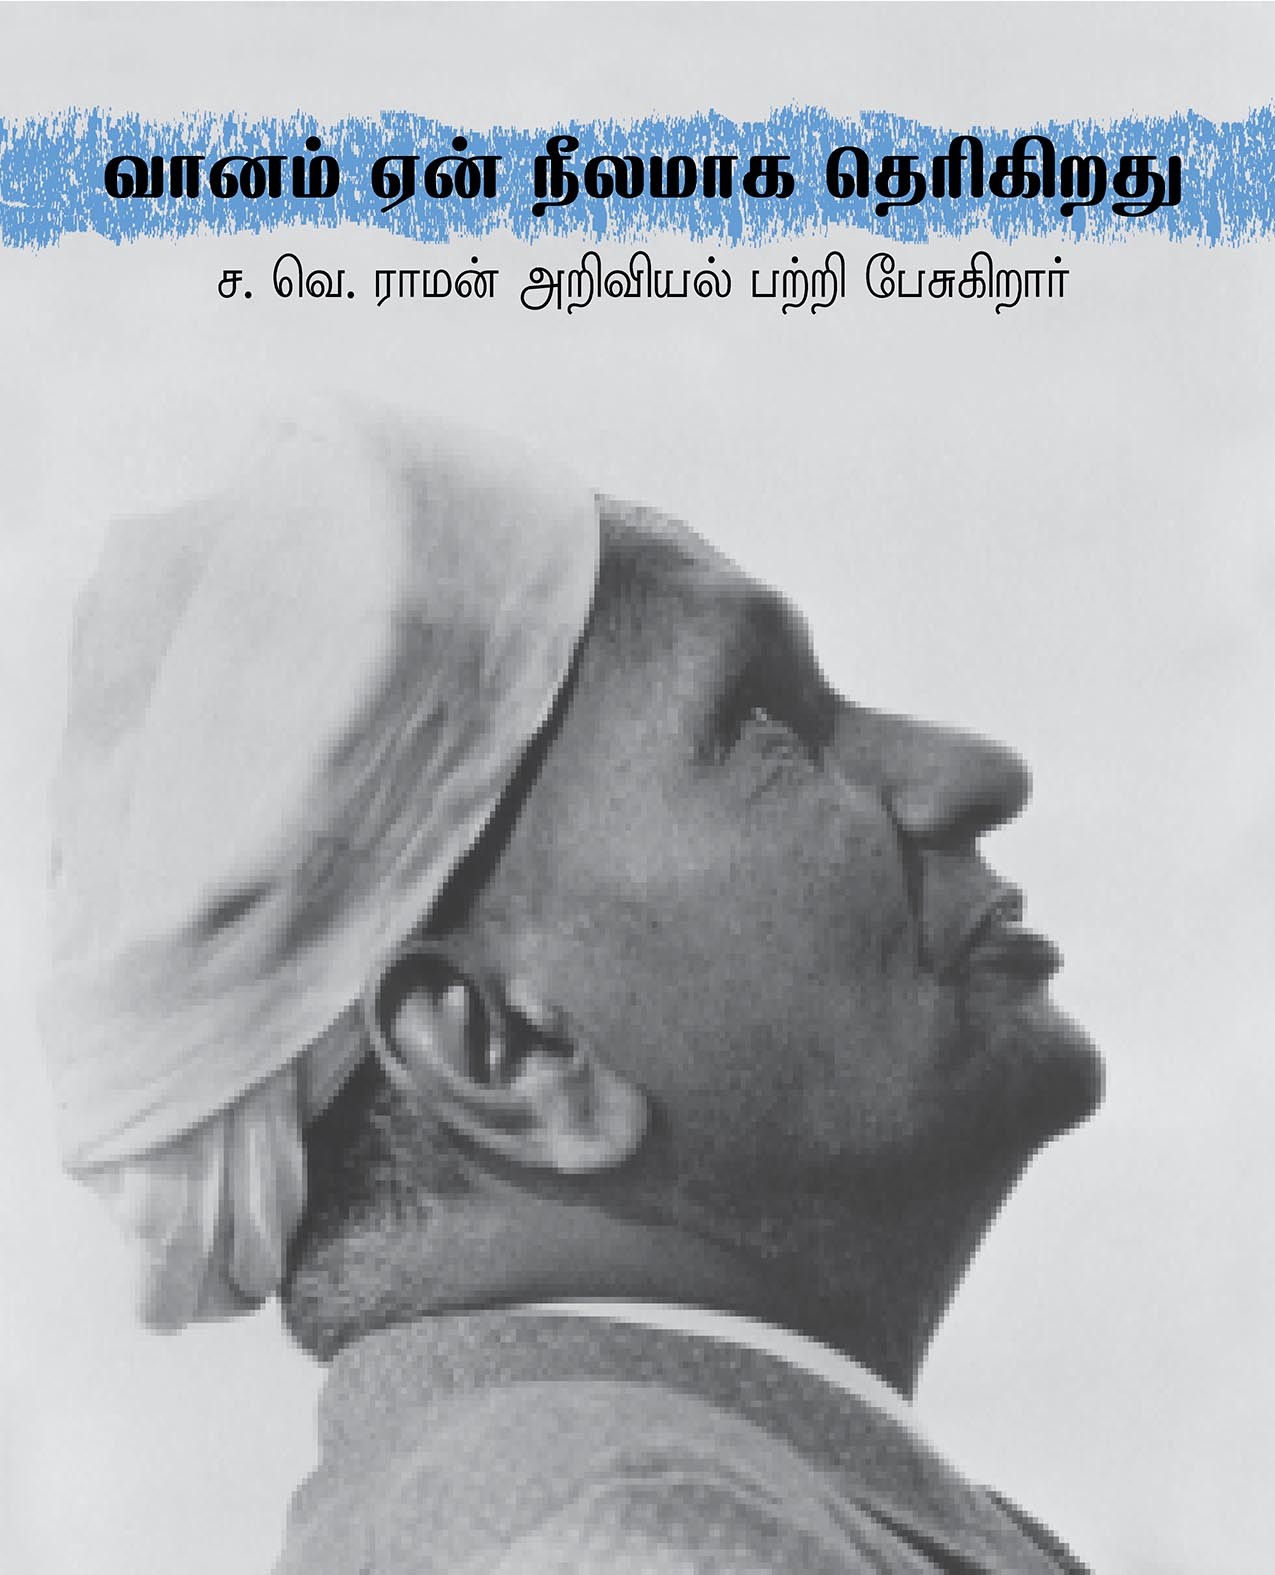 Why The Sky Is Blue/Vaanam Yaen Neelamaaga Therigiradu (Tamil)